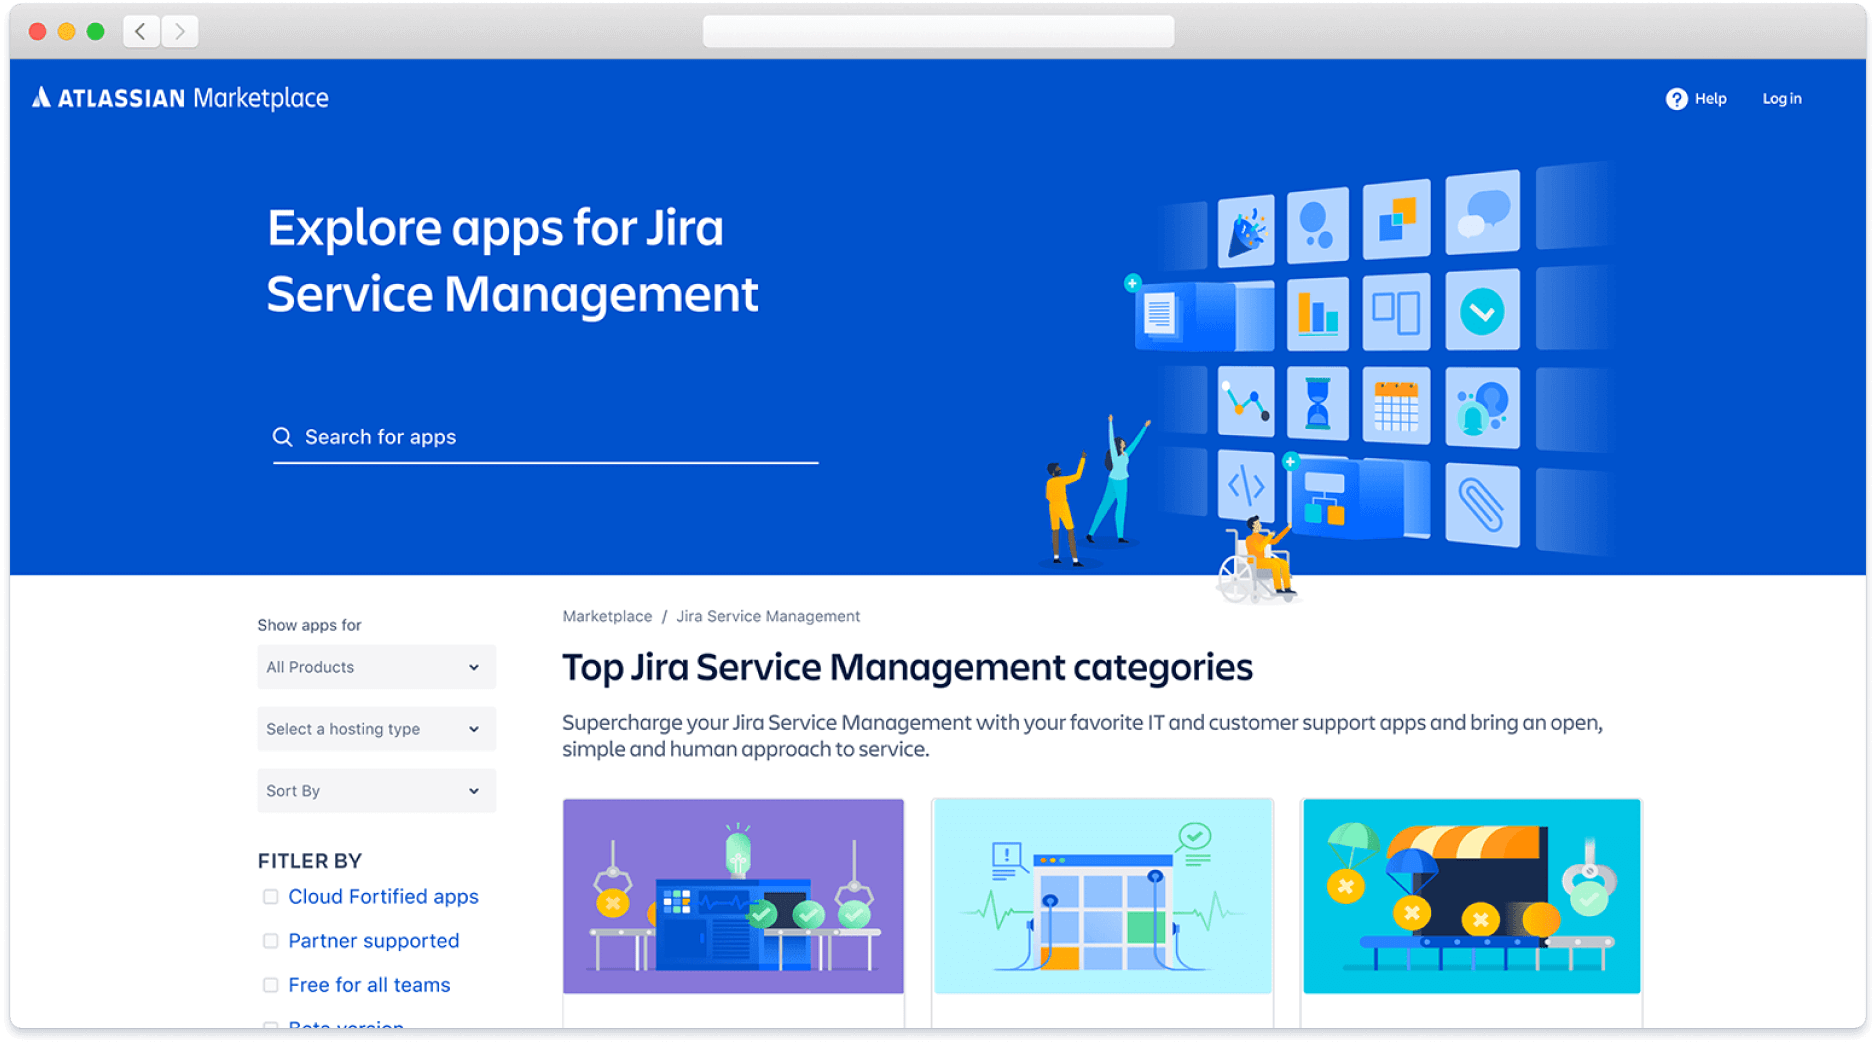 「Explore apps for Jira Service Management」と表示されている Atlassian Marketplace の画面